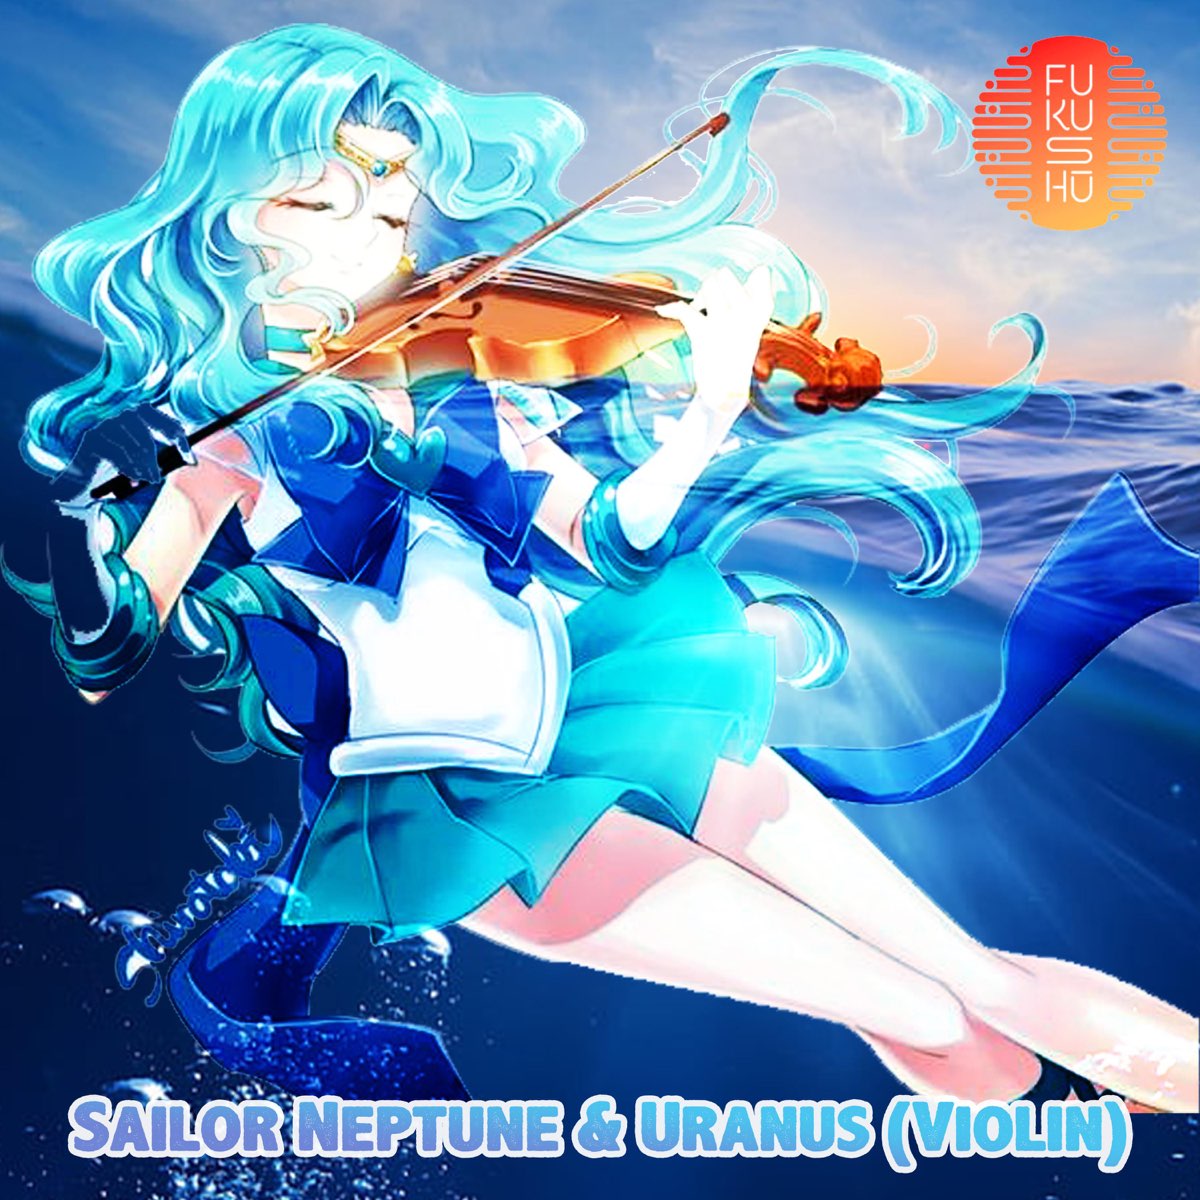 Baka Mitai (Power Metal Version) YAKUZA – Song by FUKUSHU BAND – Apple Music